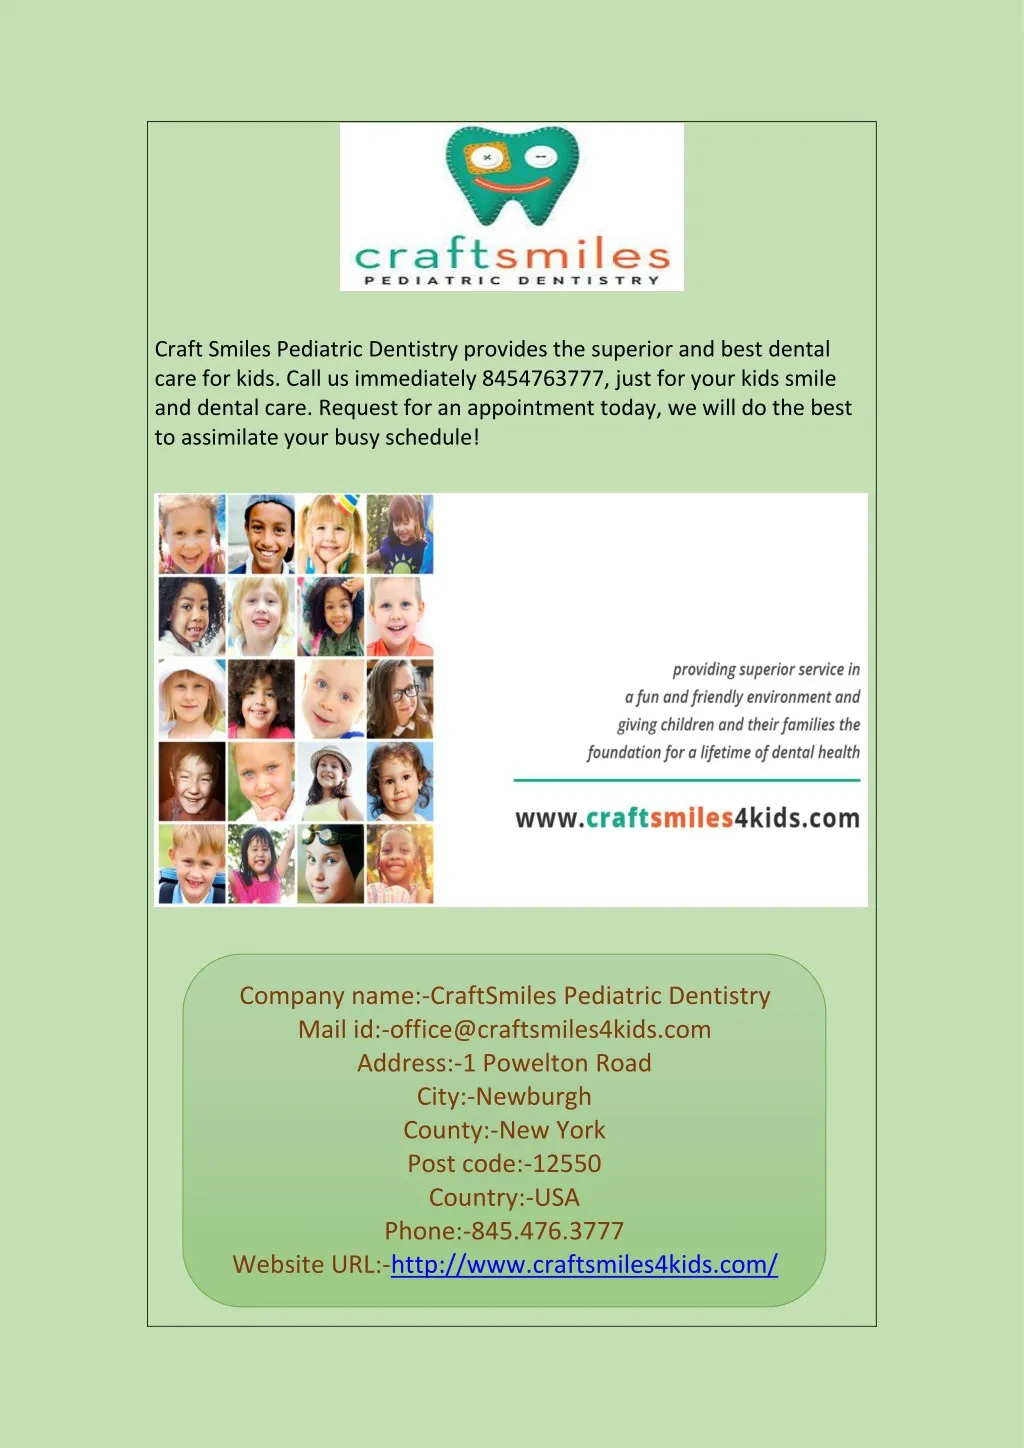 craft smiles pediatric dentistry provides